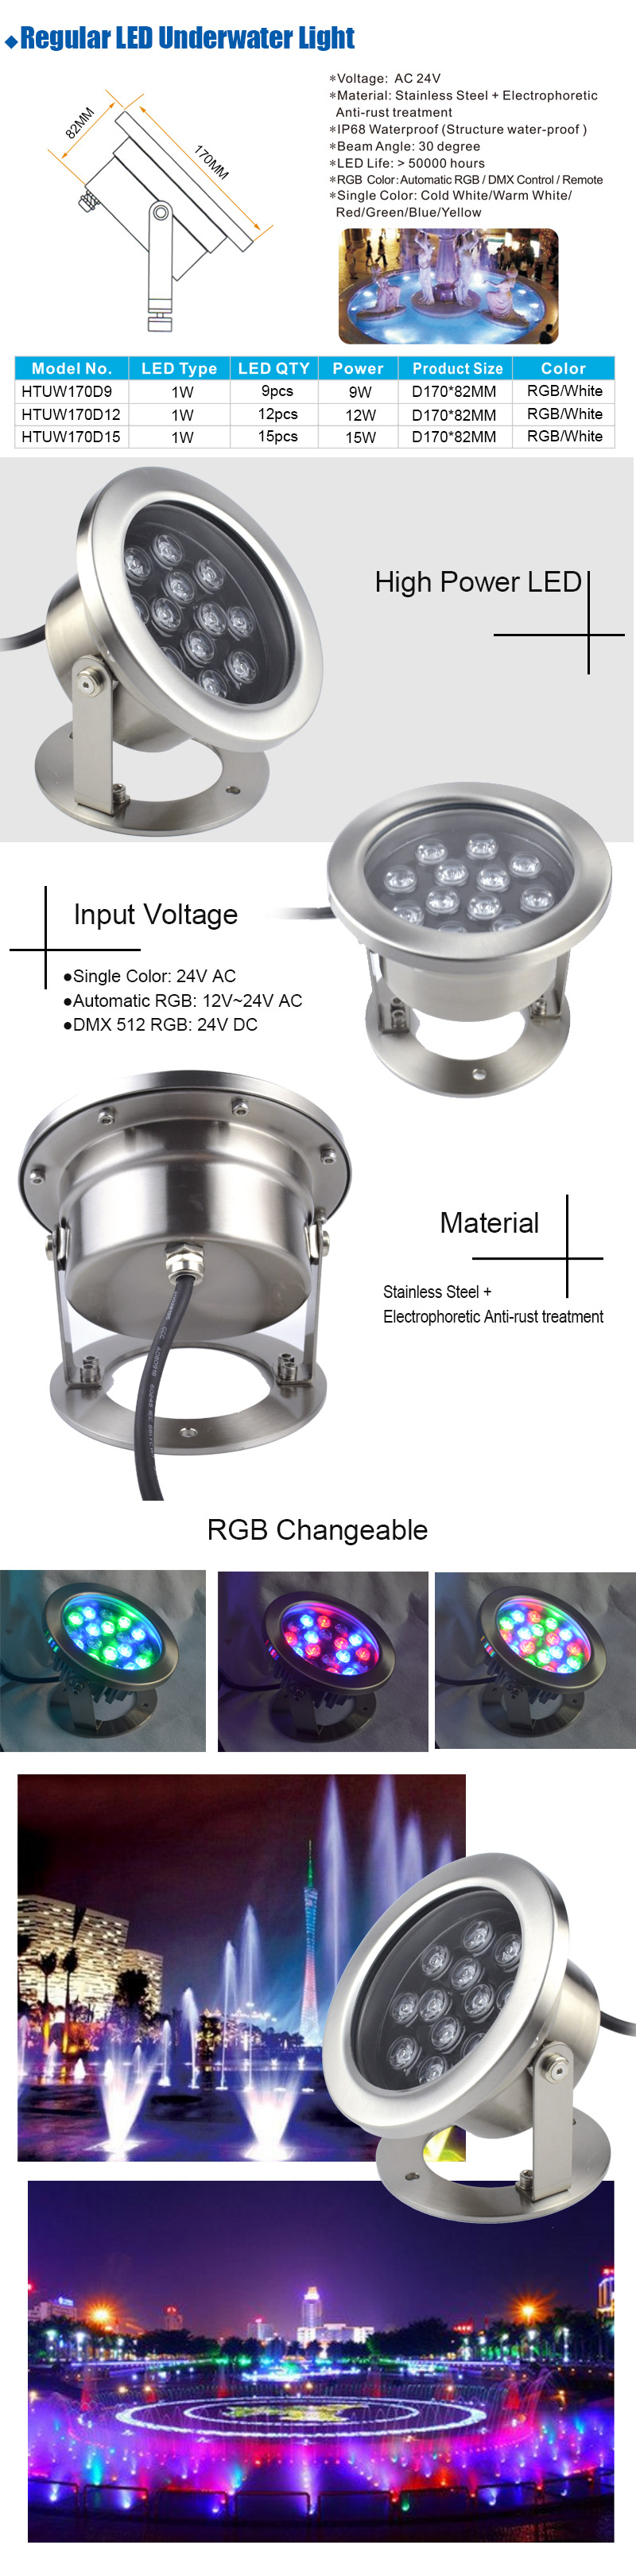 Regular 15W D190mm Stainless Steel RGB led underwater light IP68